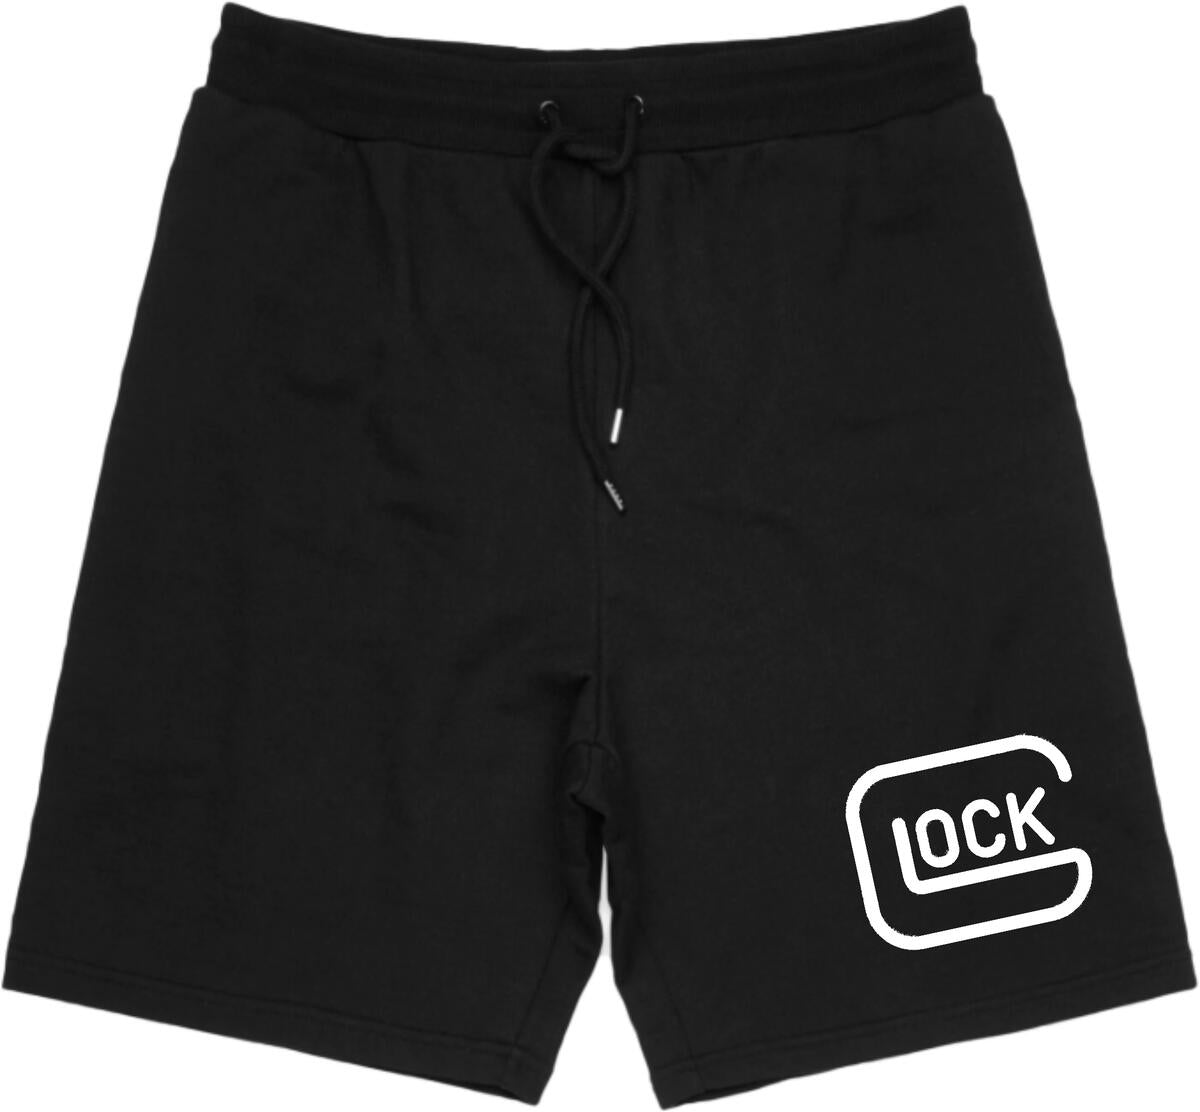 Point Blank - Glock Shorts (Black)